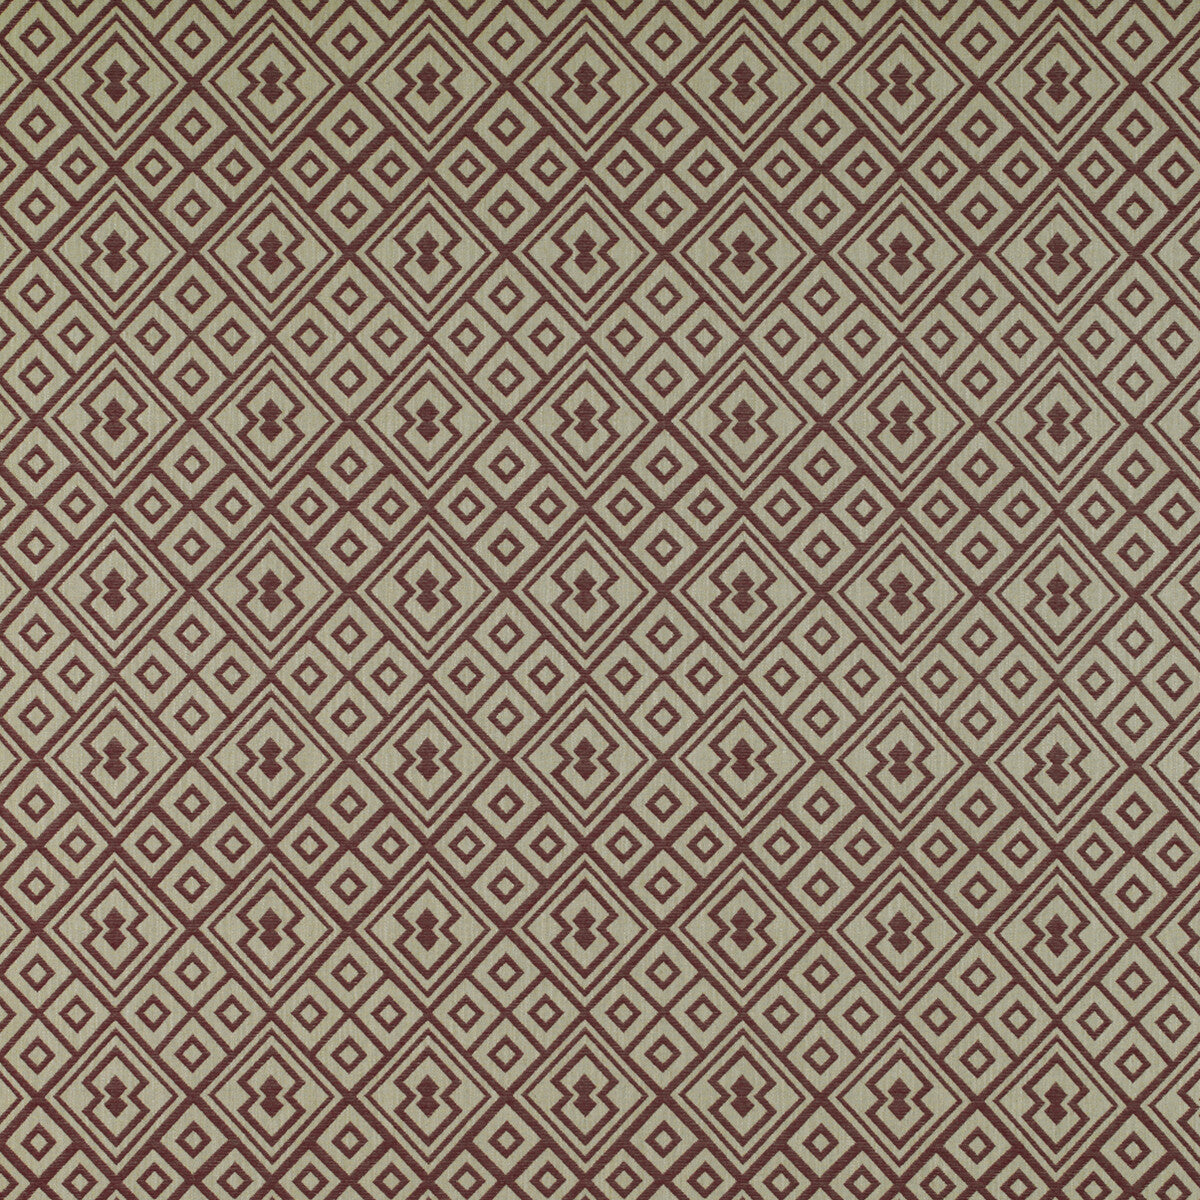 Bergamo fabric in burdeos color - pattern GDT5325.005.0 - by Gaston y Daniela in the Tierras collection